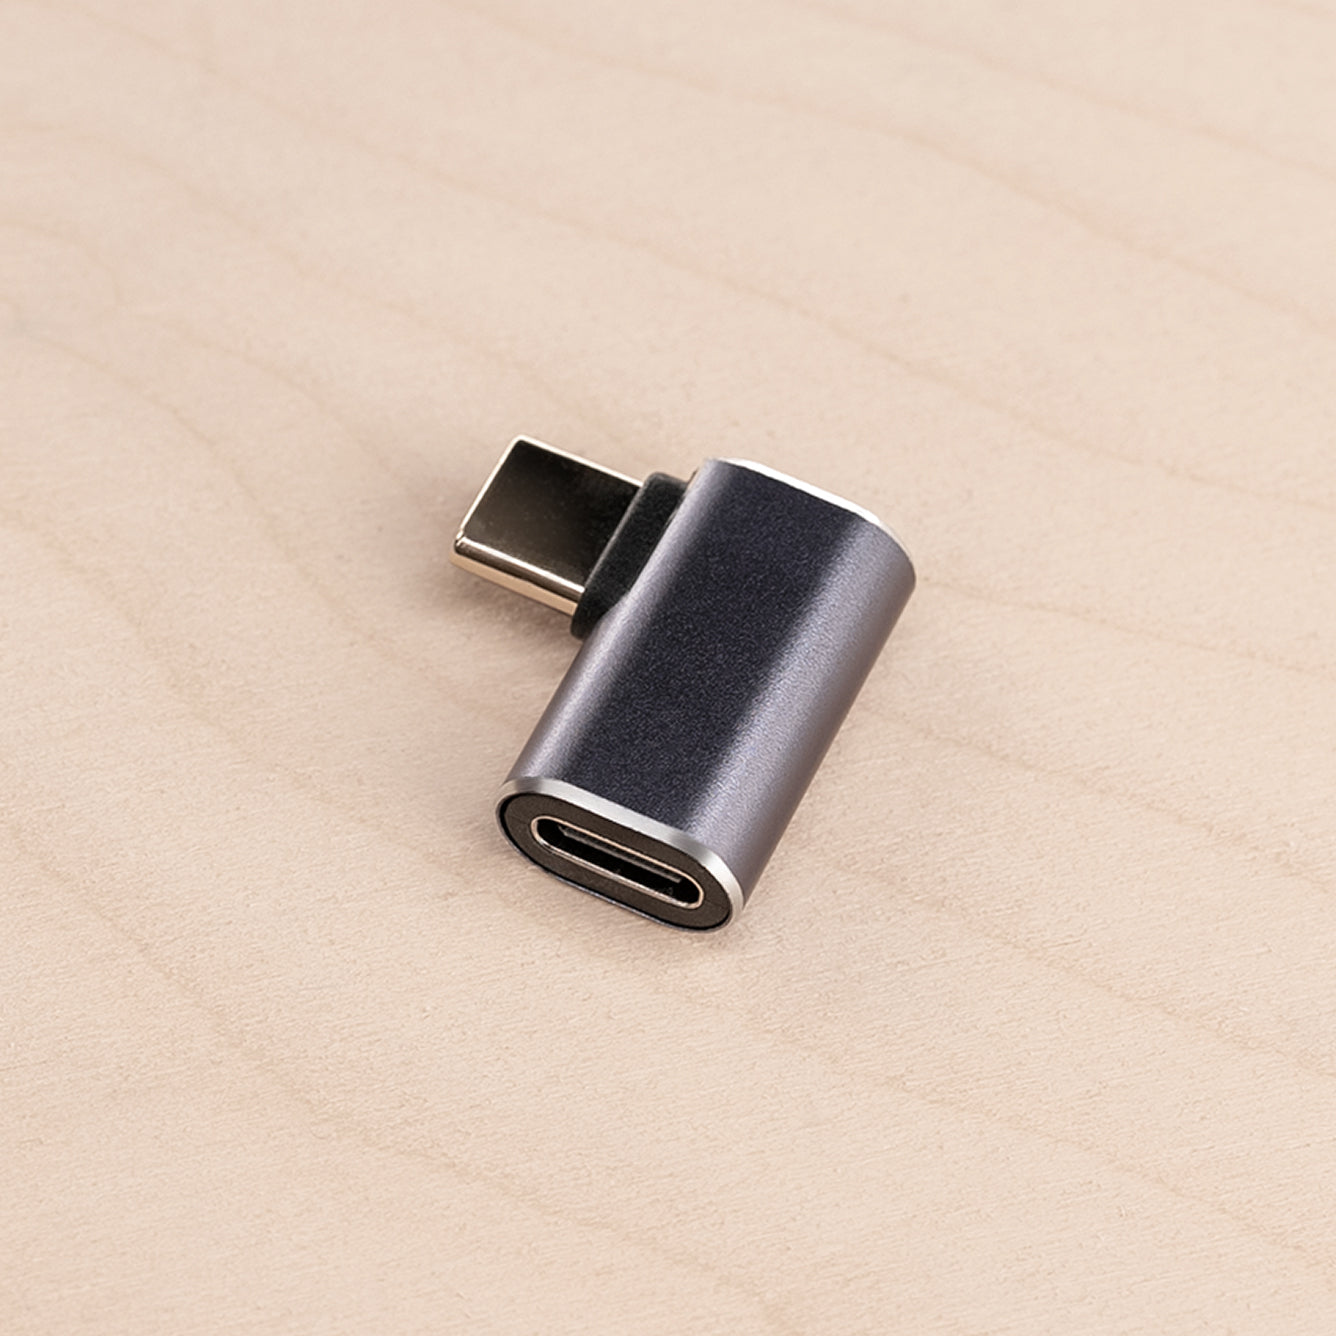 Micro USB to USB Type-C adapter